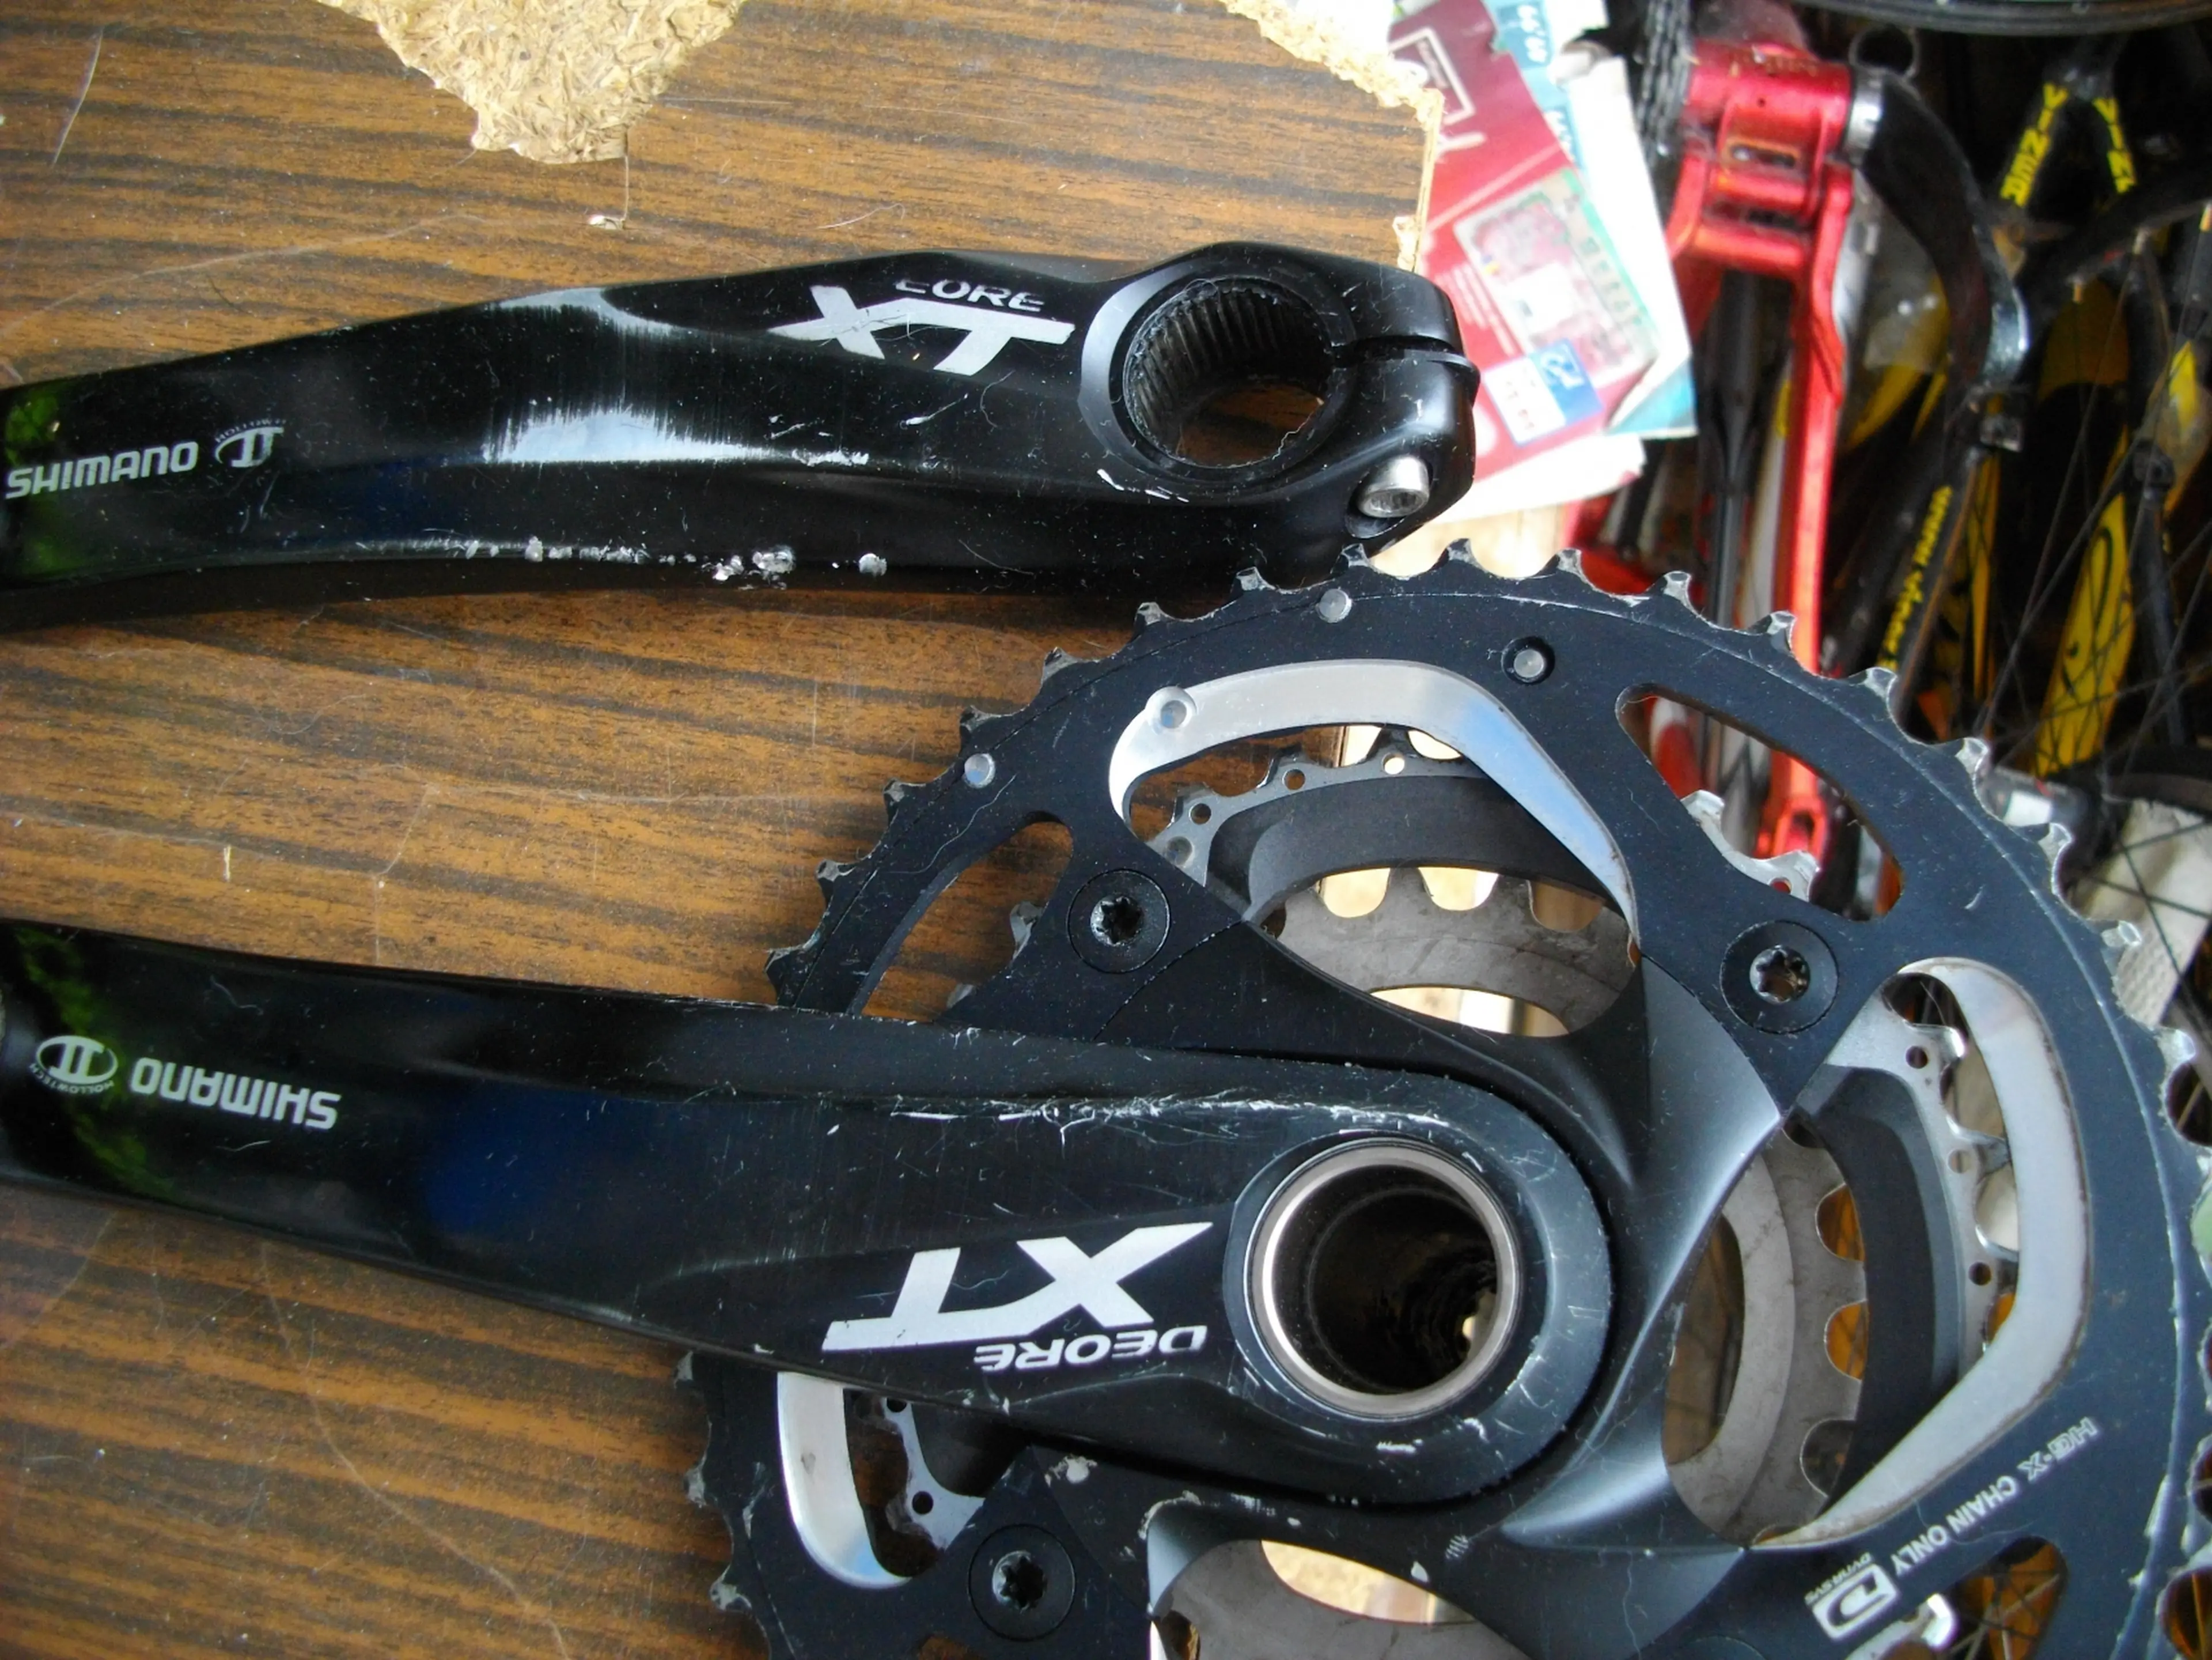 9. Shimano xt m780 + pedale Sixpack